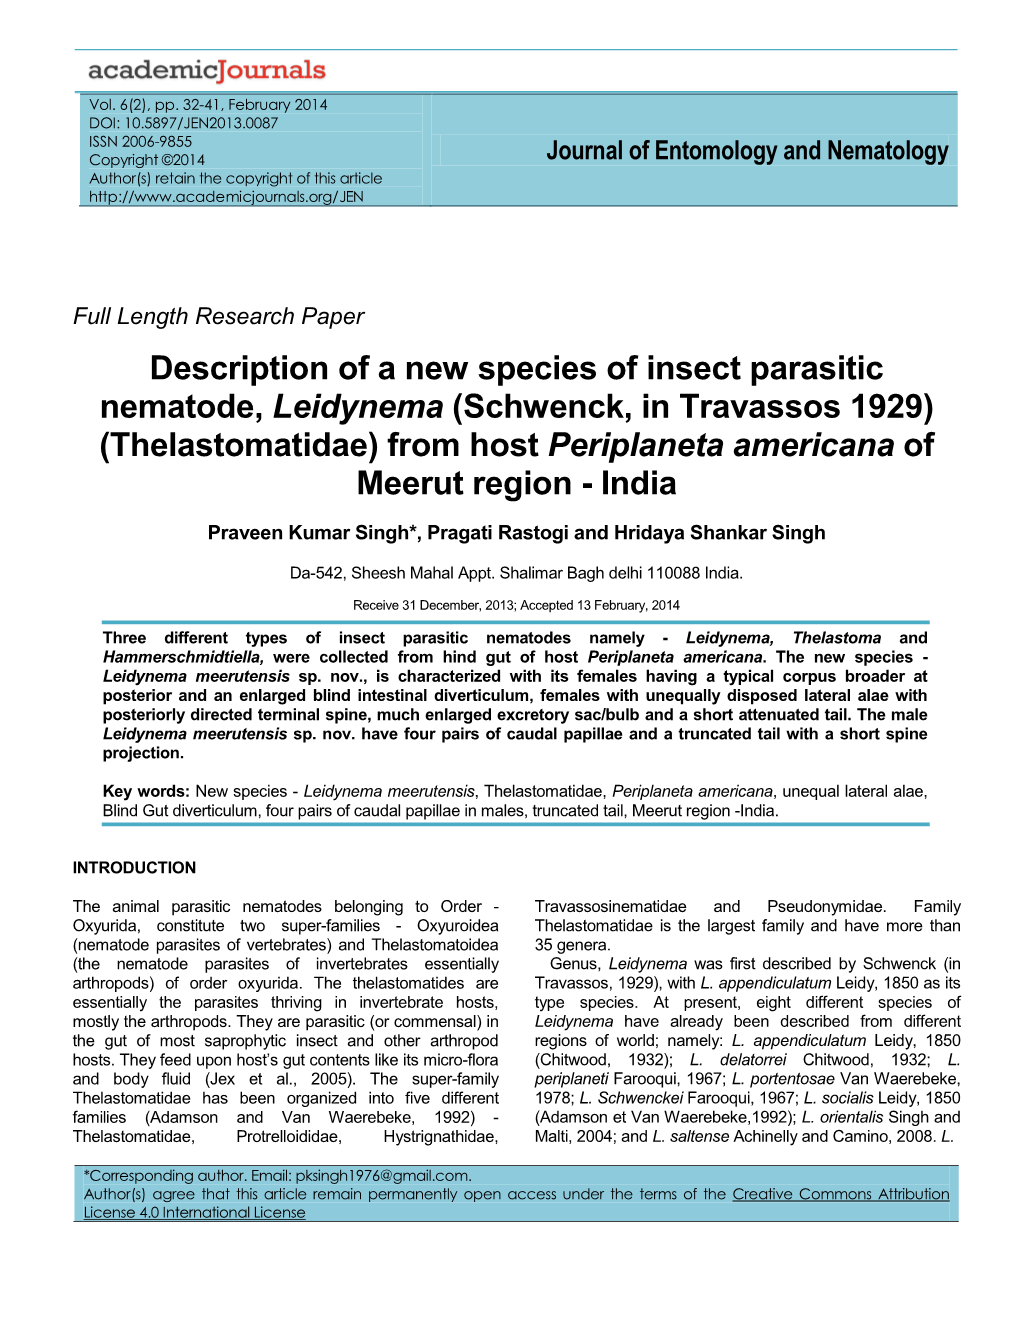 Thelastomatidae) from Host Periplaneta Americana of Meerut Region - India